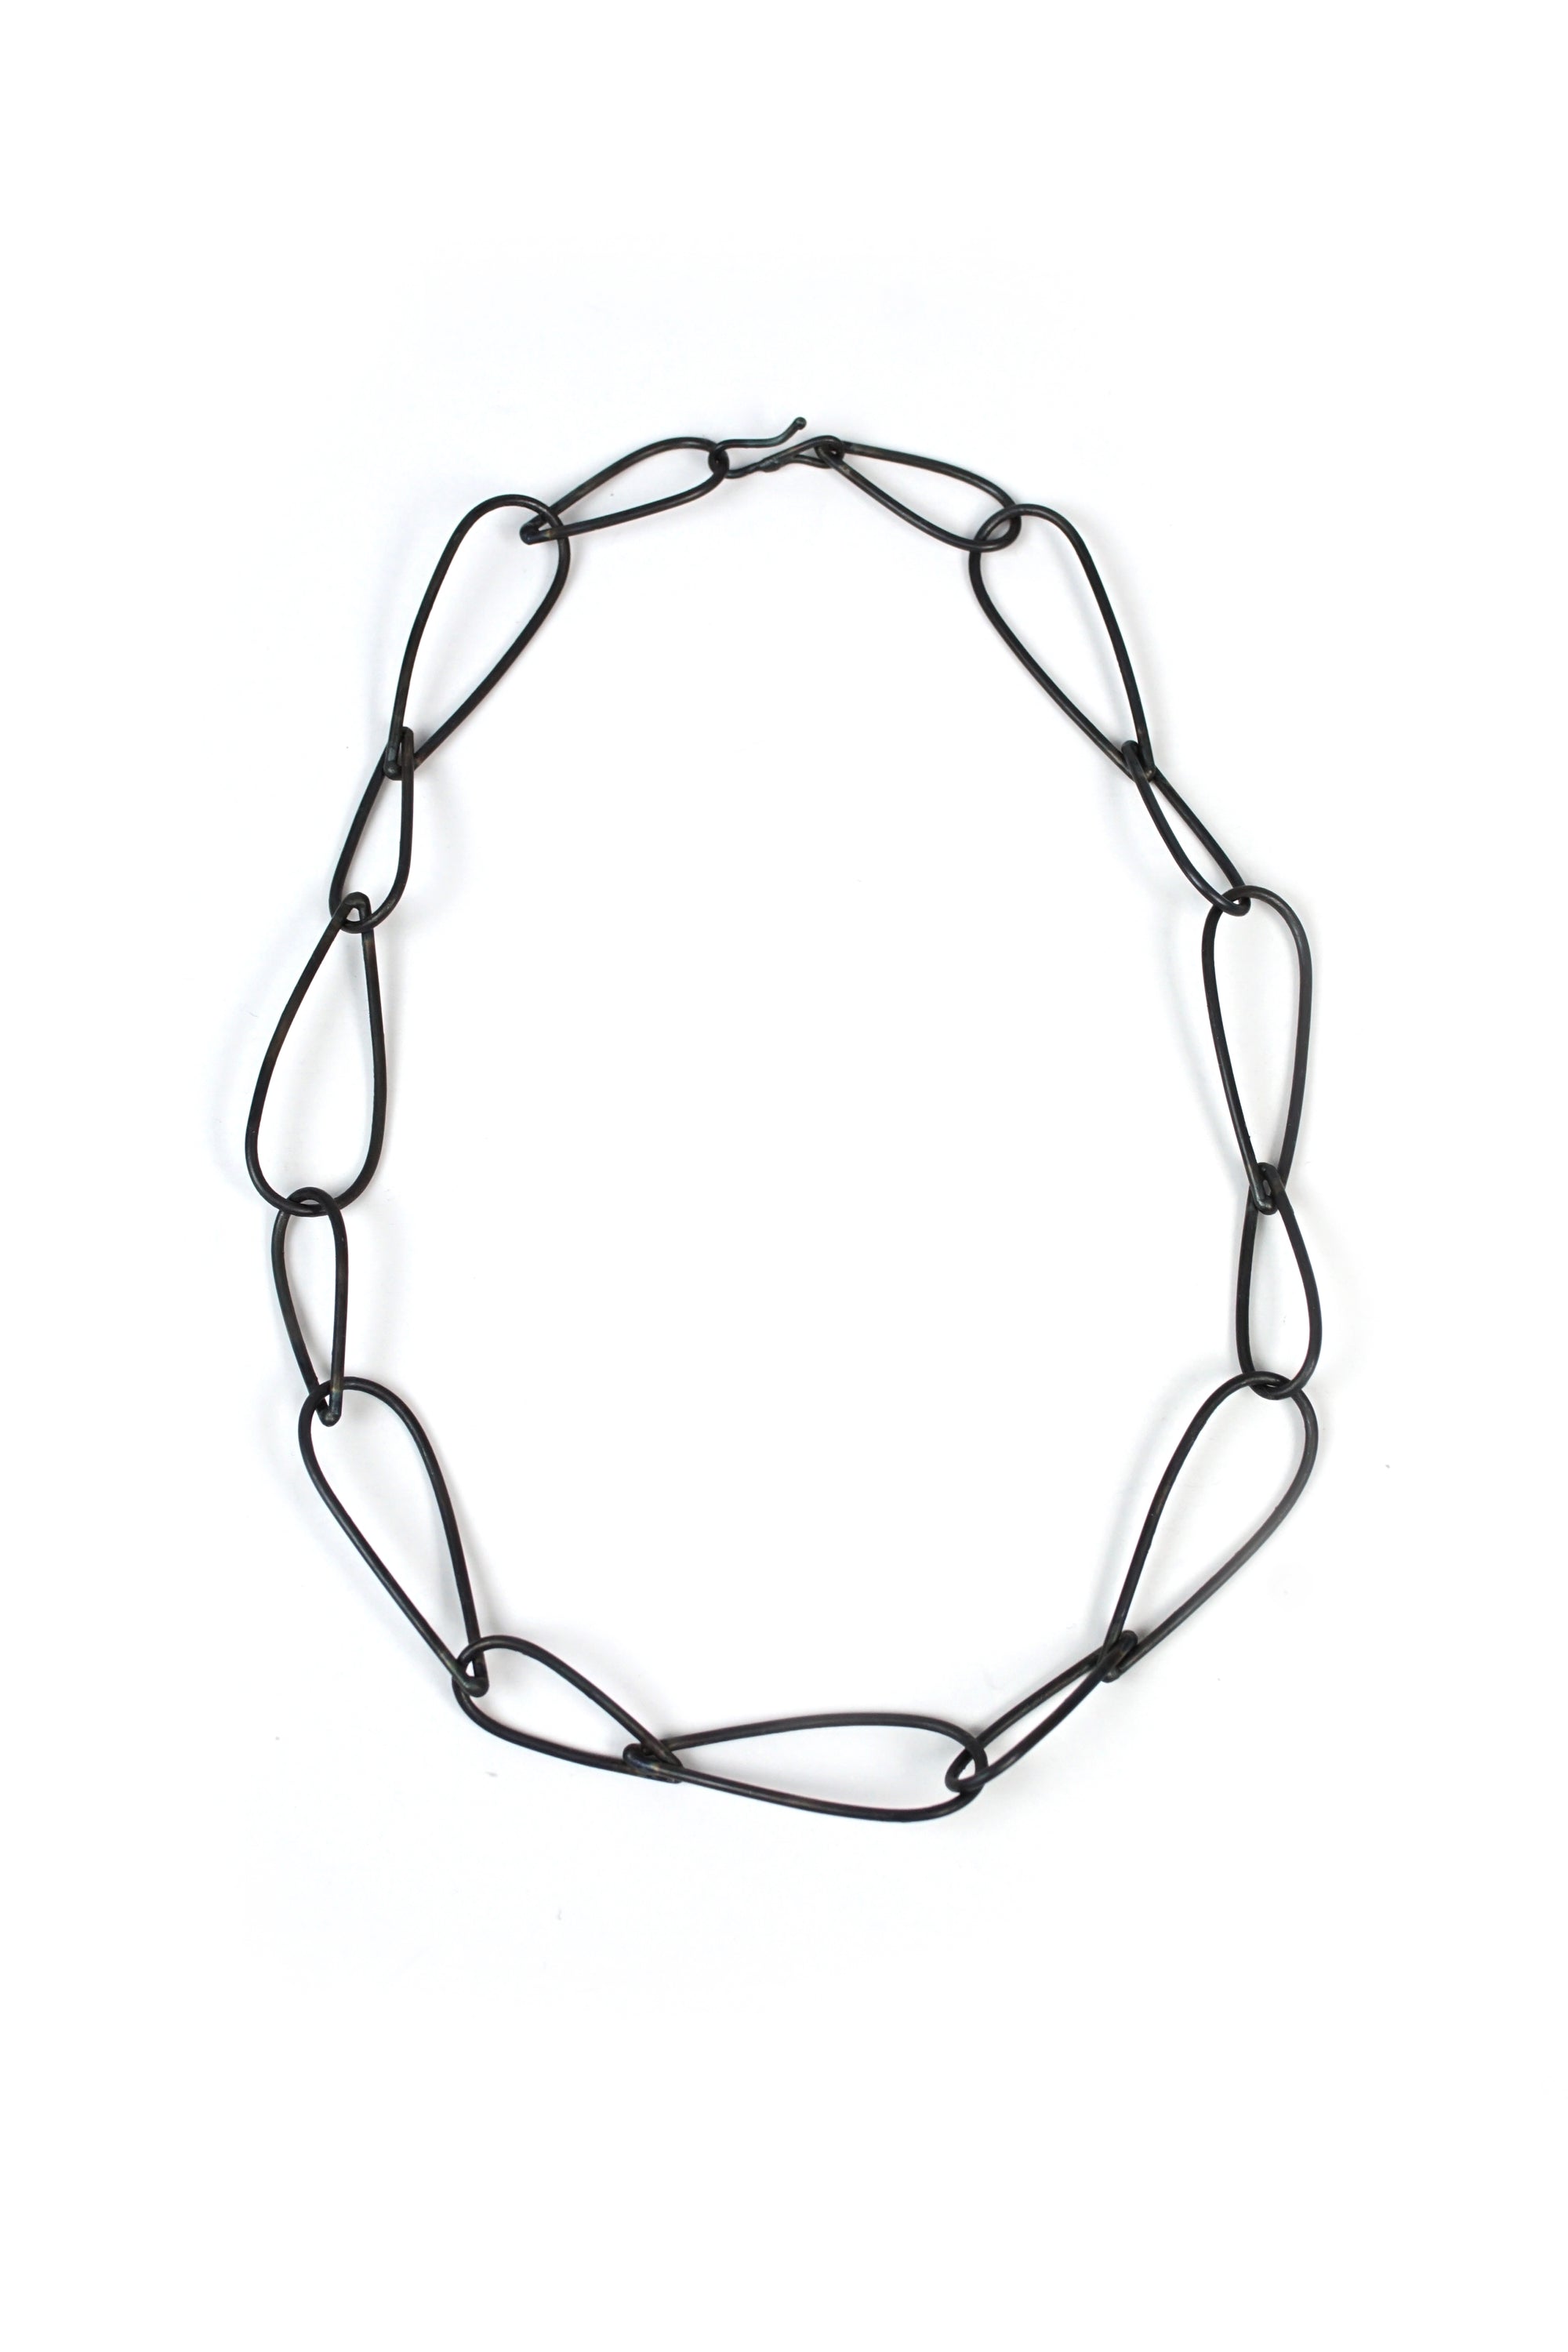 Midi Modular Necklace No. 1 in steel